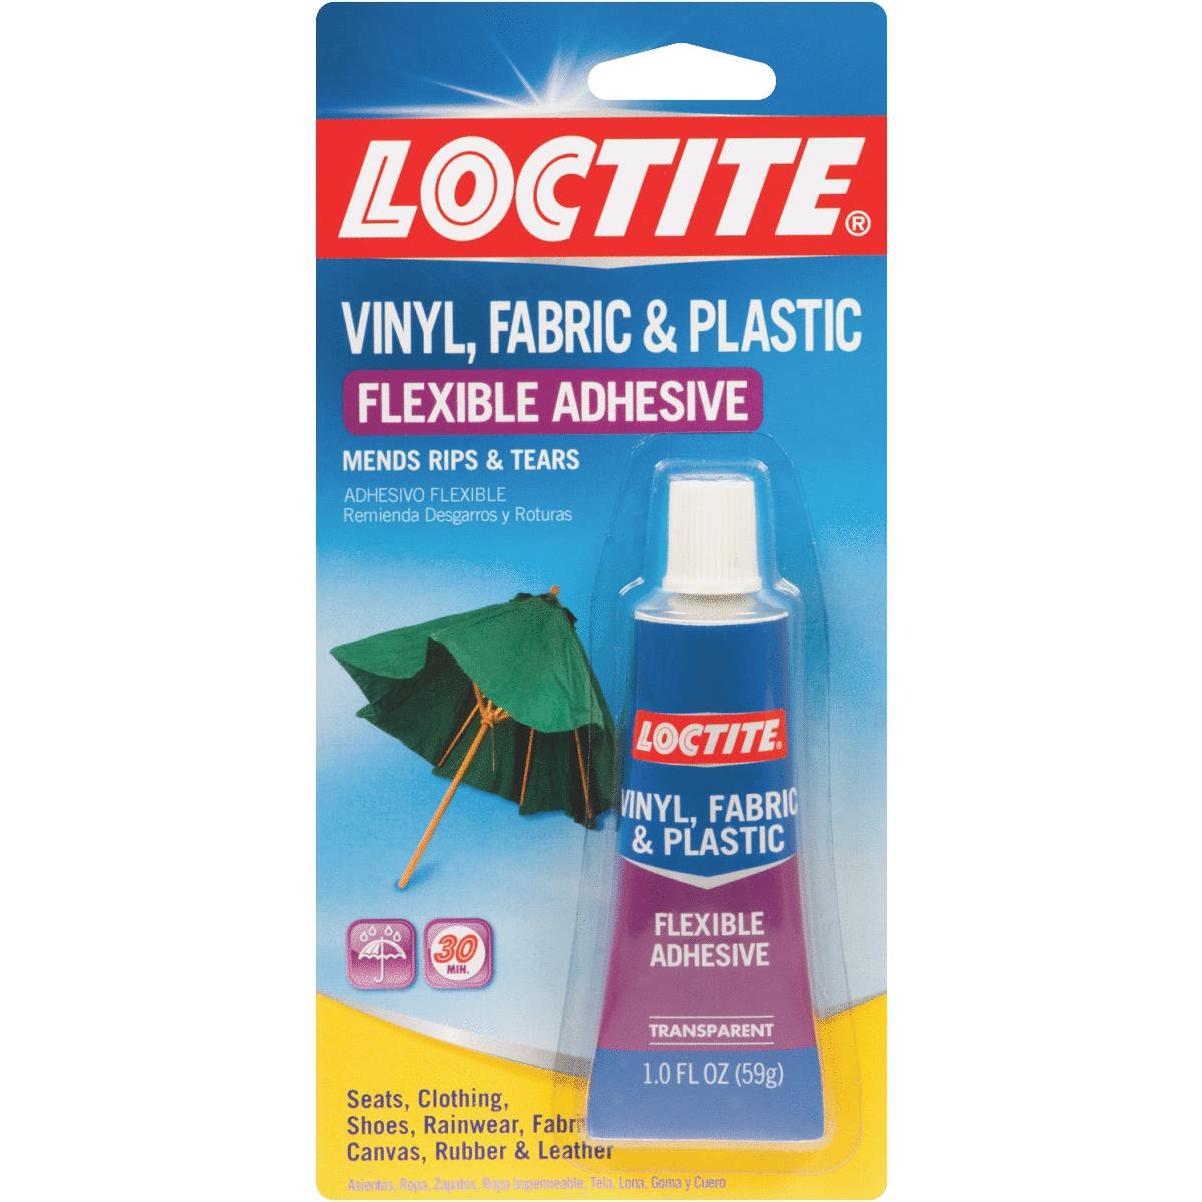 Loctite 1.0 oz Vinyl, Fabric and Plastic Flexible Adhesive, 85102